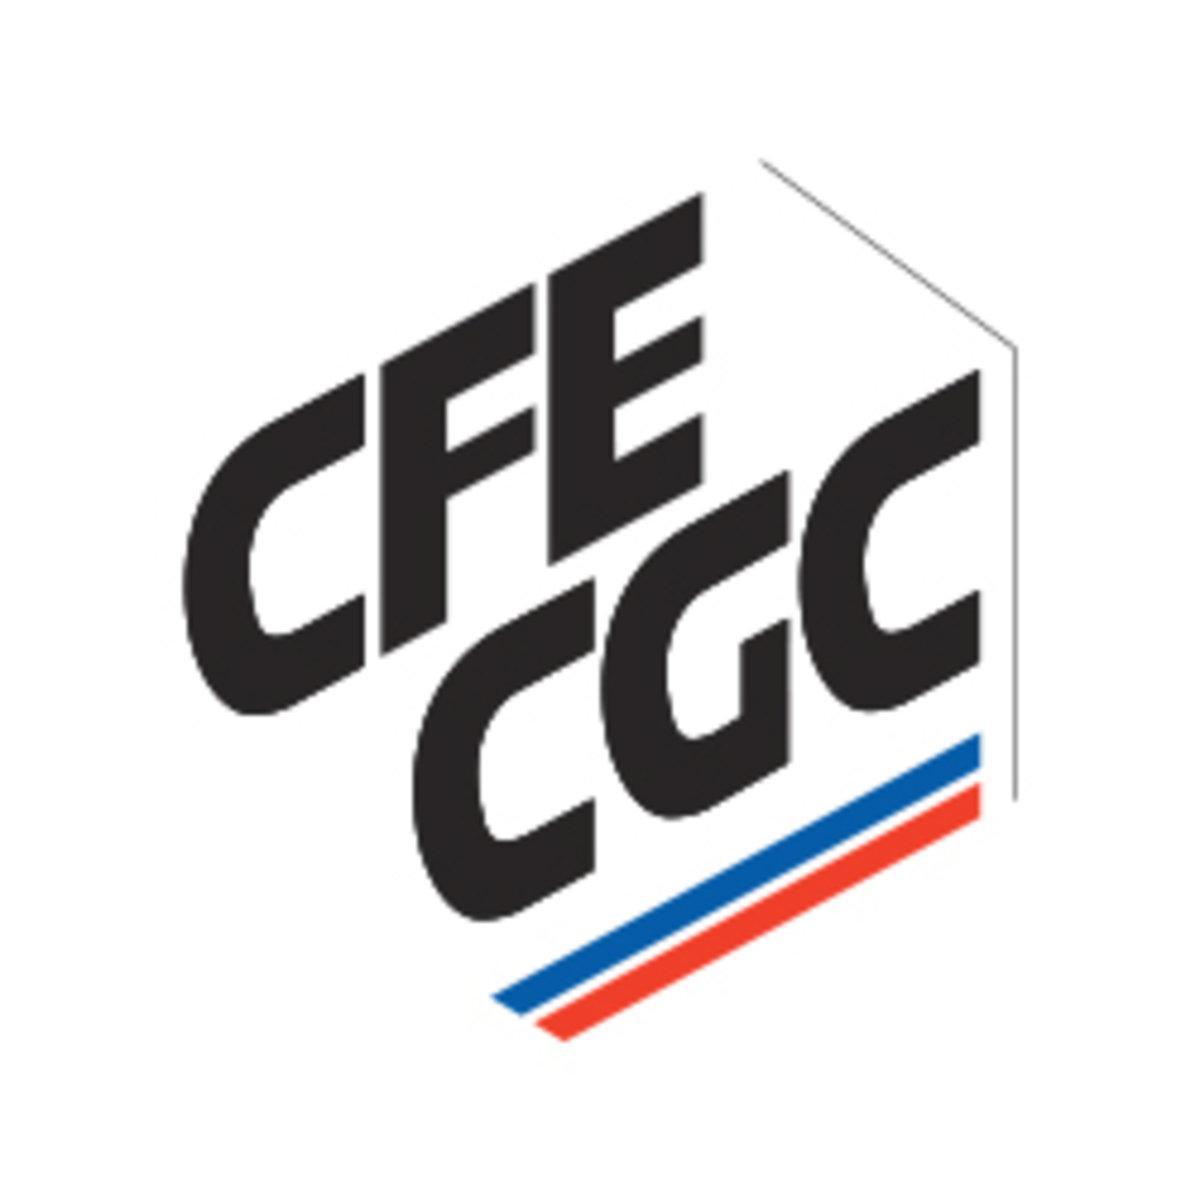 LA CONFEDERATION CFE-CGC